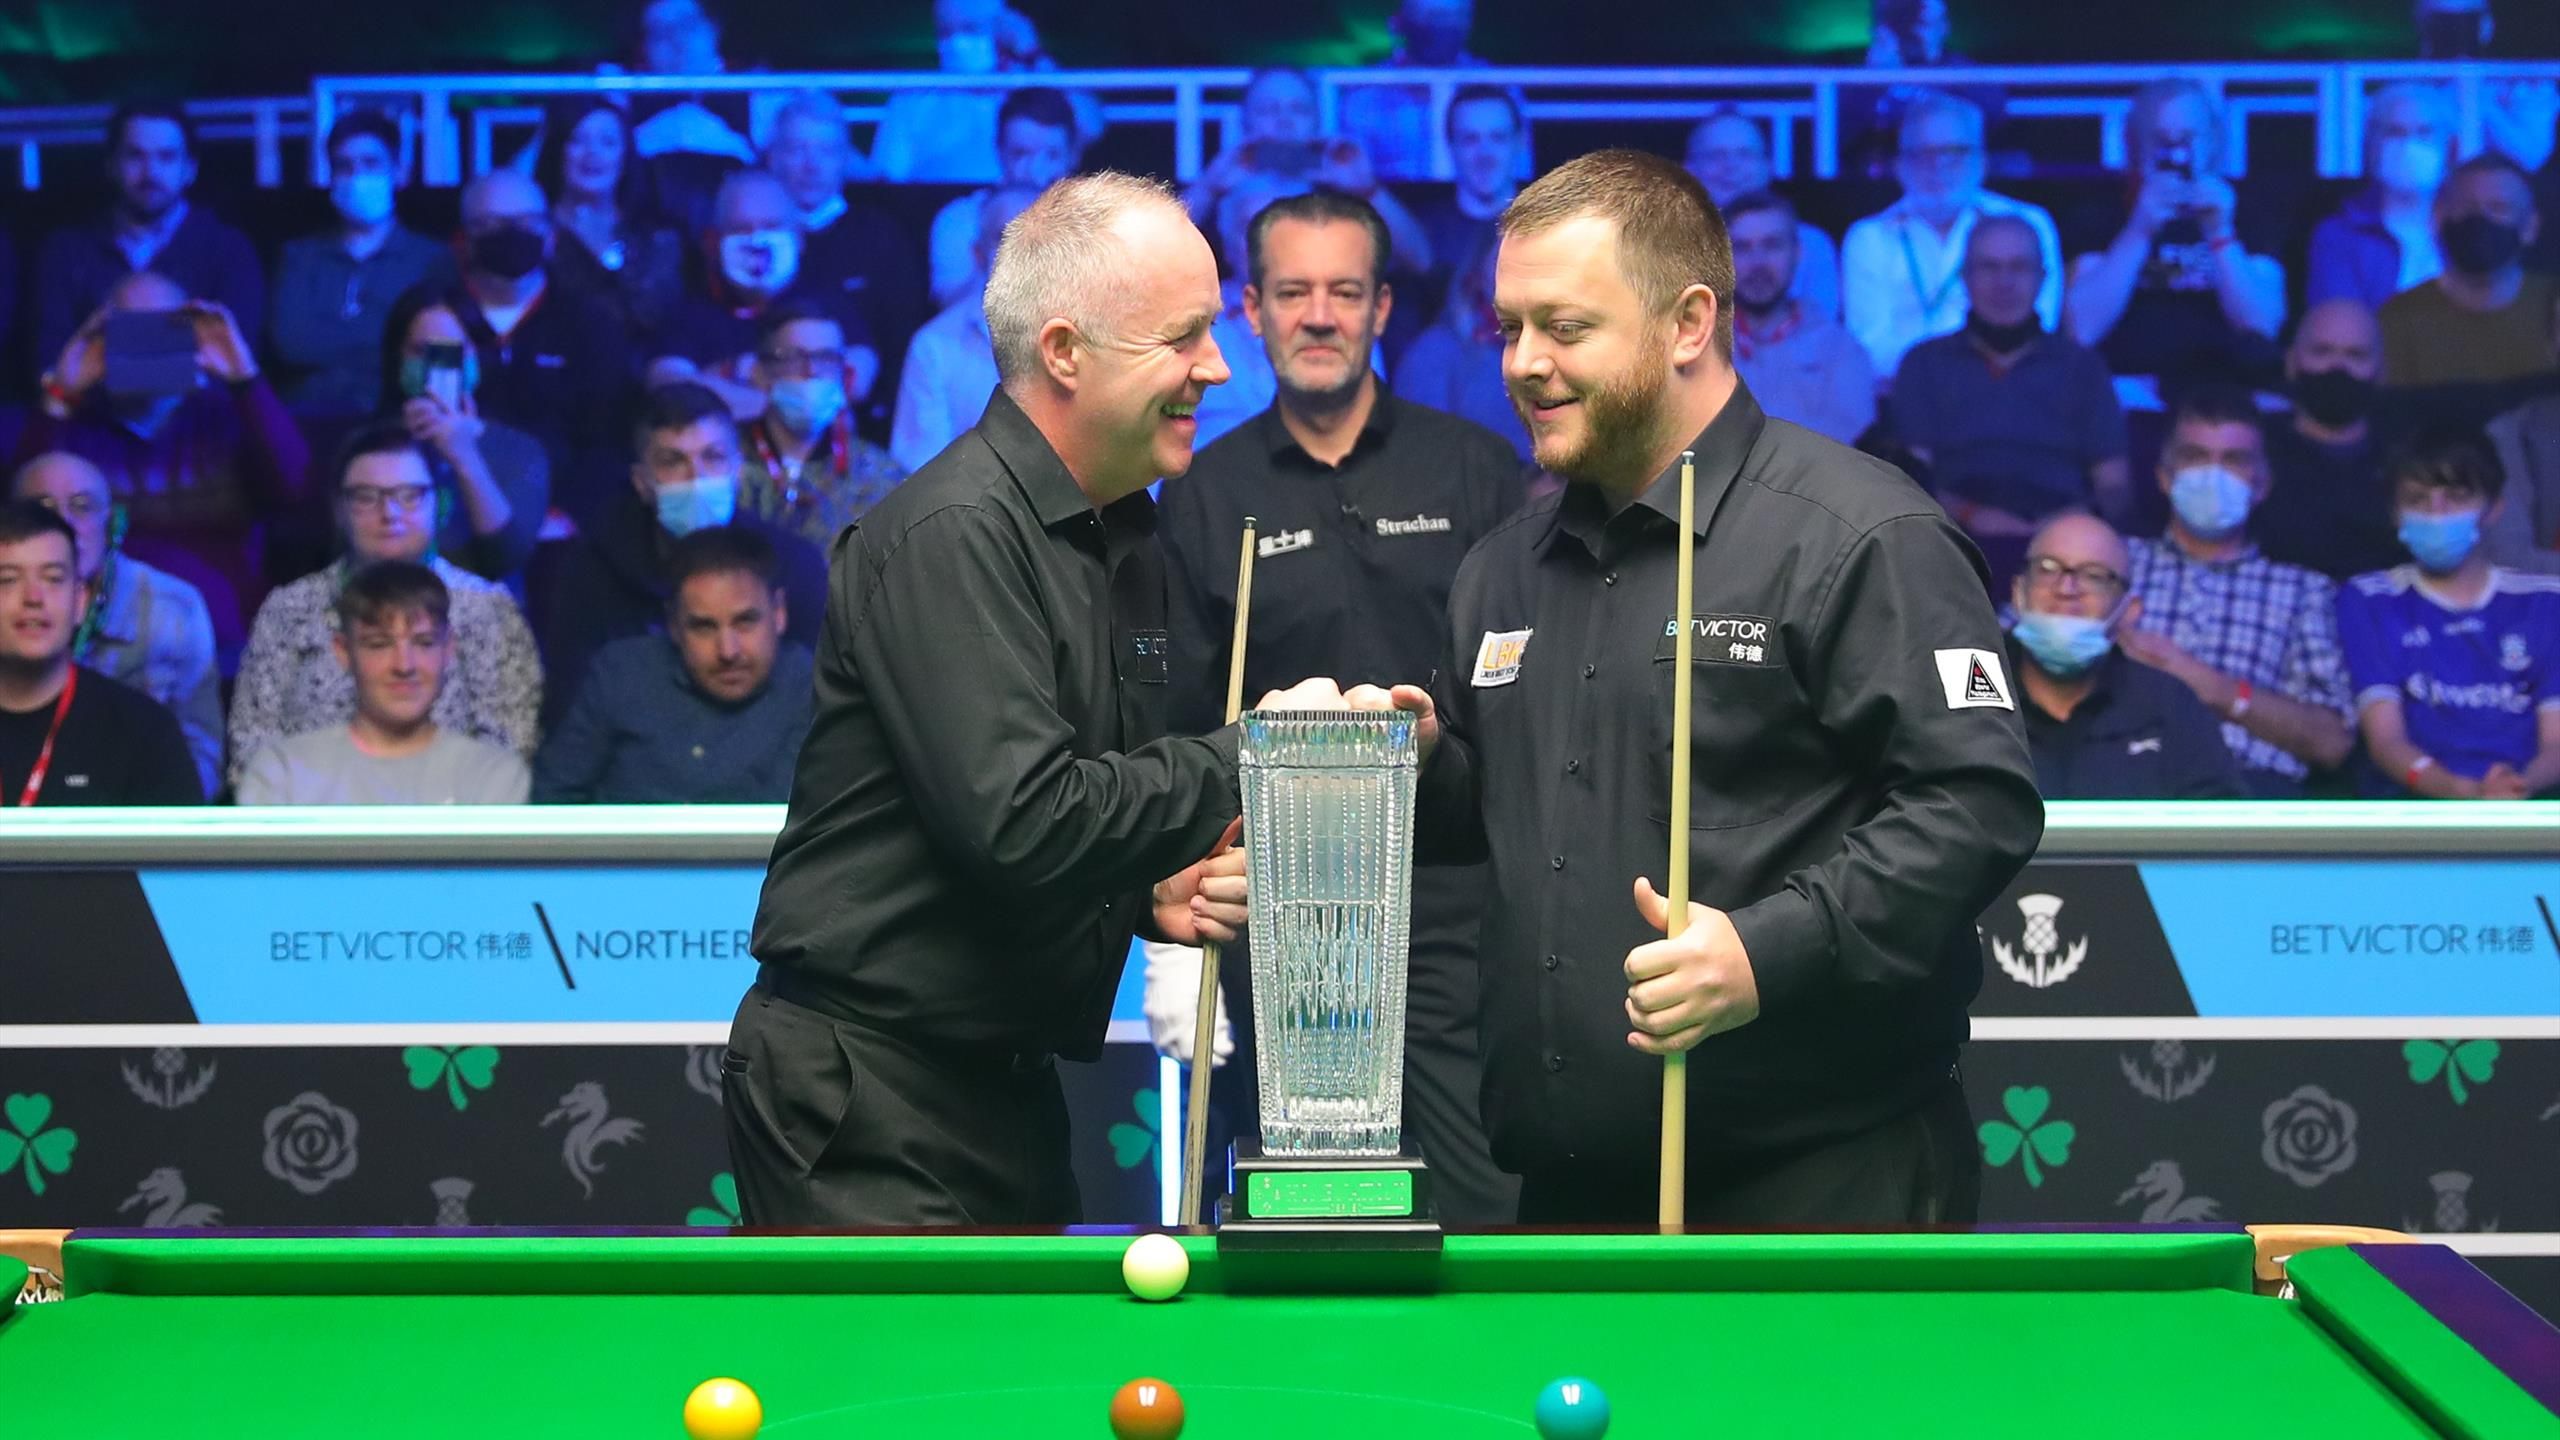 John Higgins v Mark Allen - Northern Ireland Open 2021 snooker final live updates, score, how to watch on TV